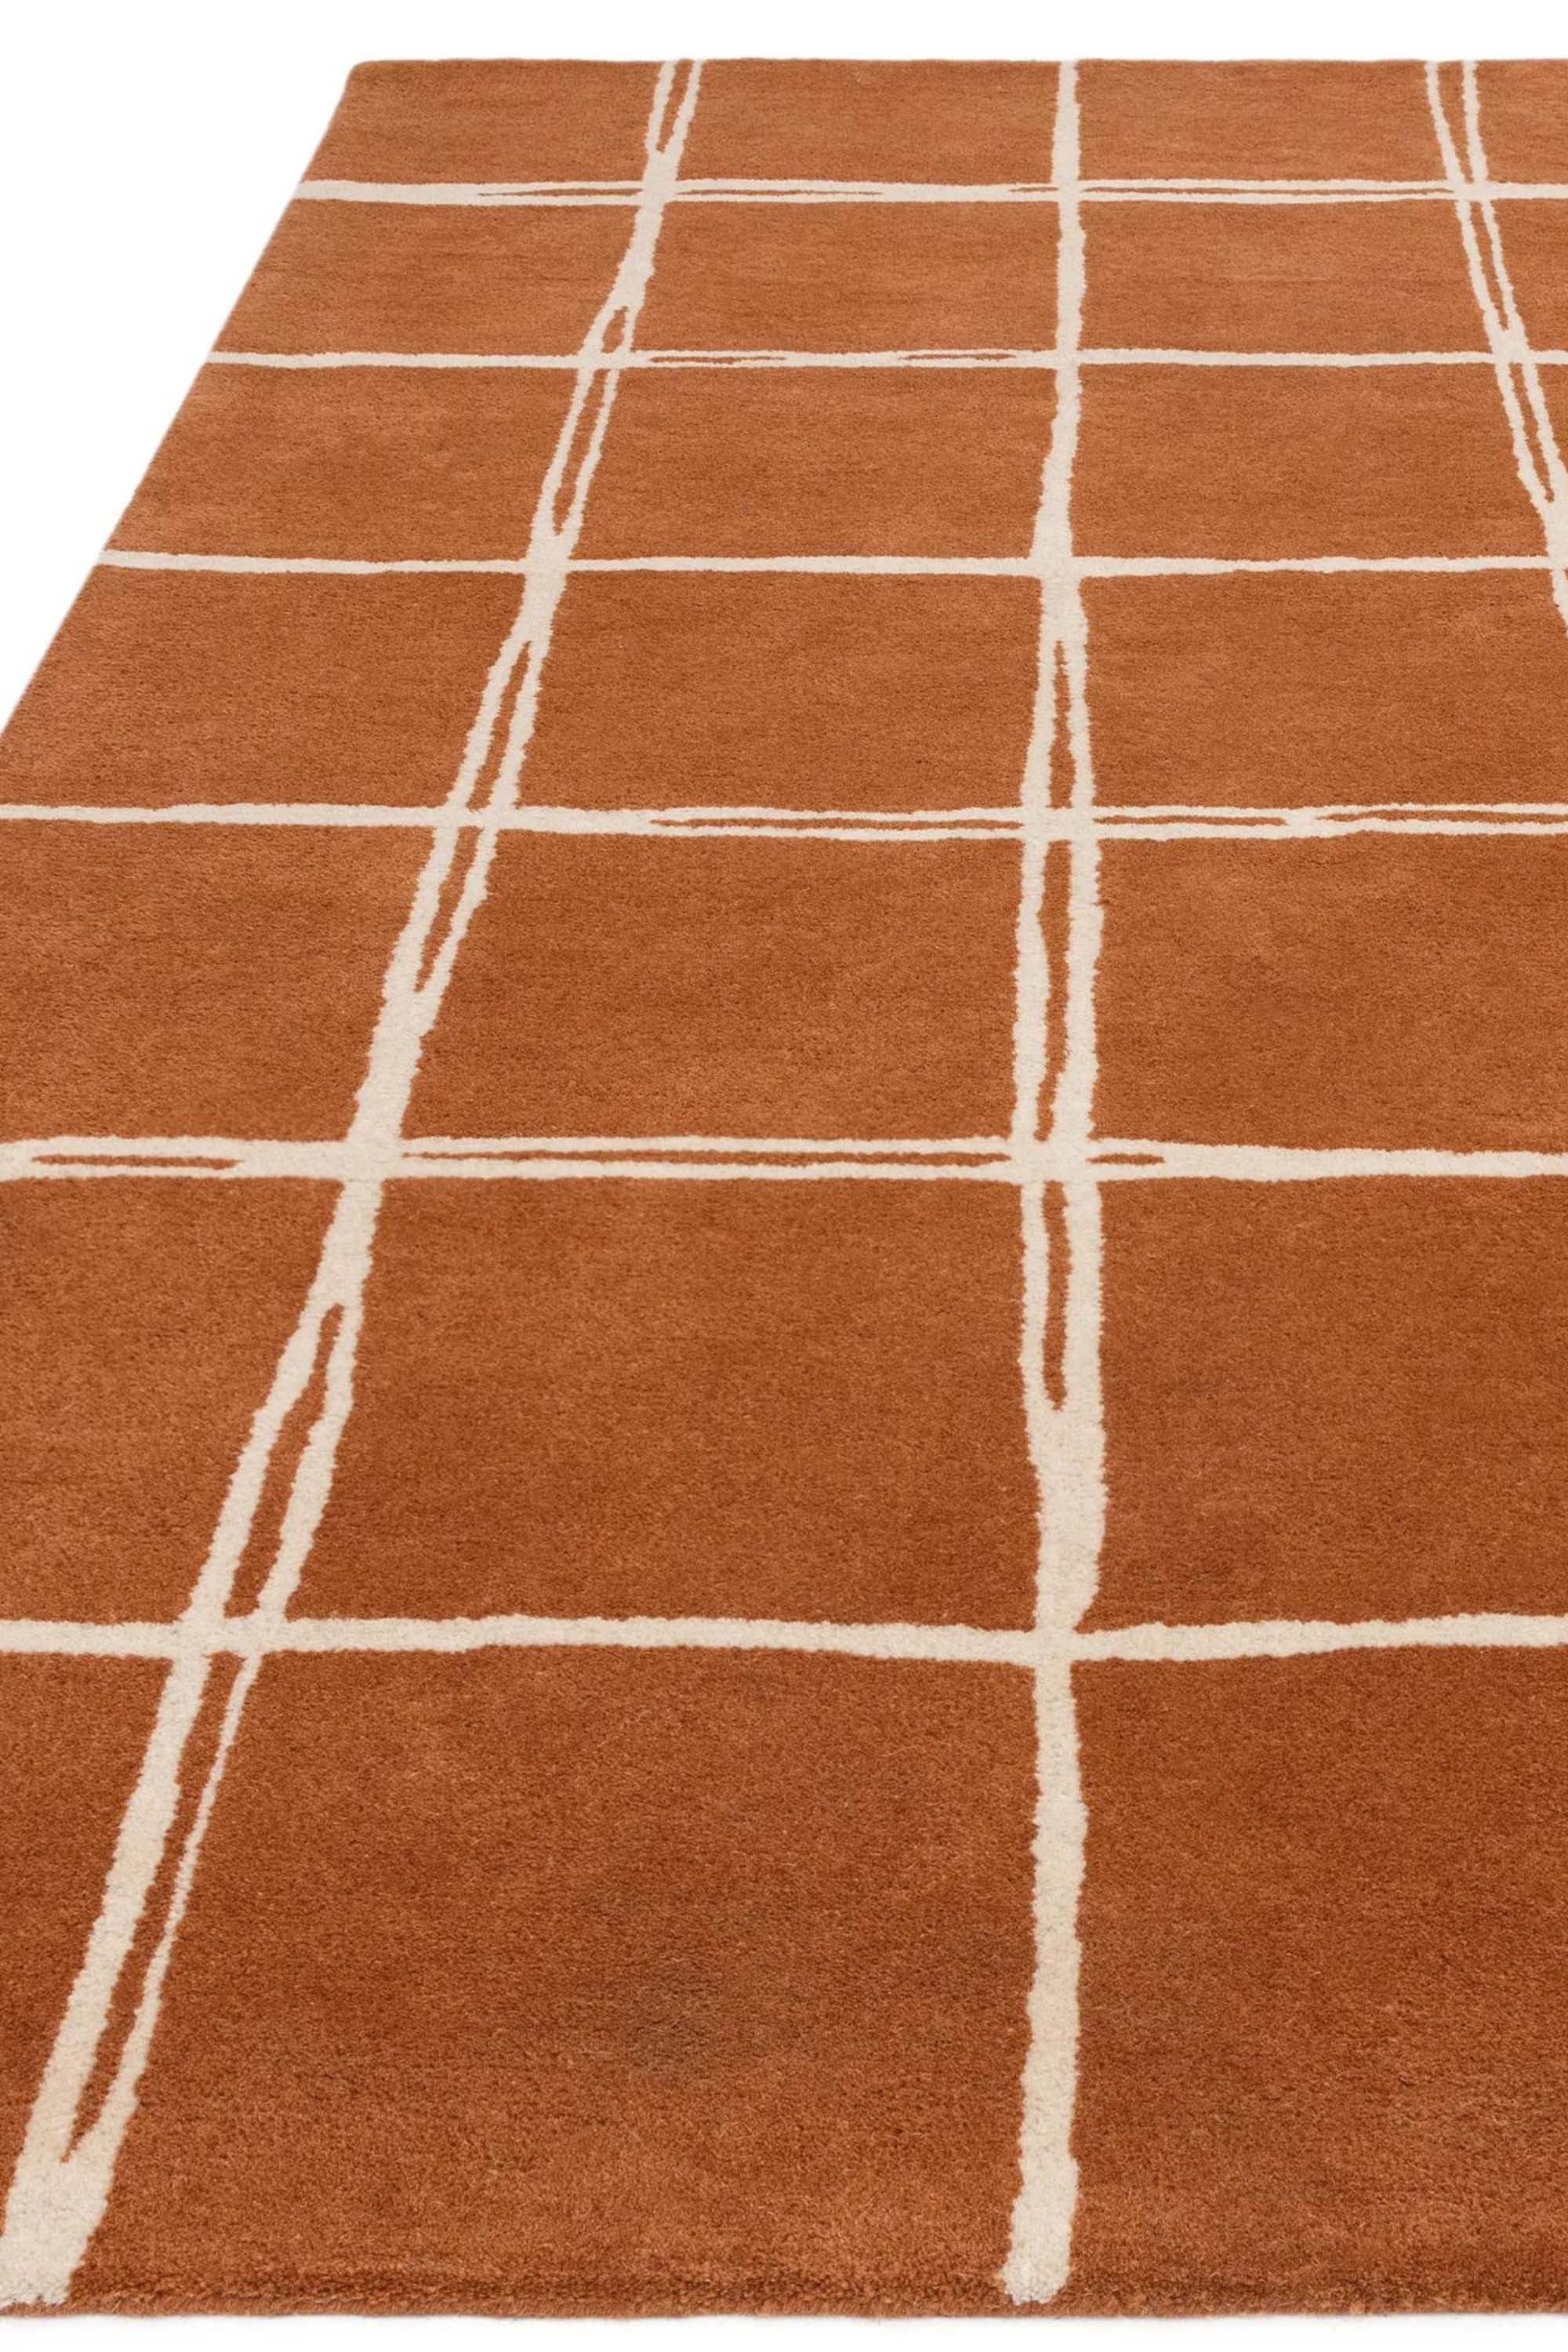 Orange rug with minimal geometric pattern 